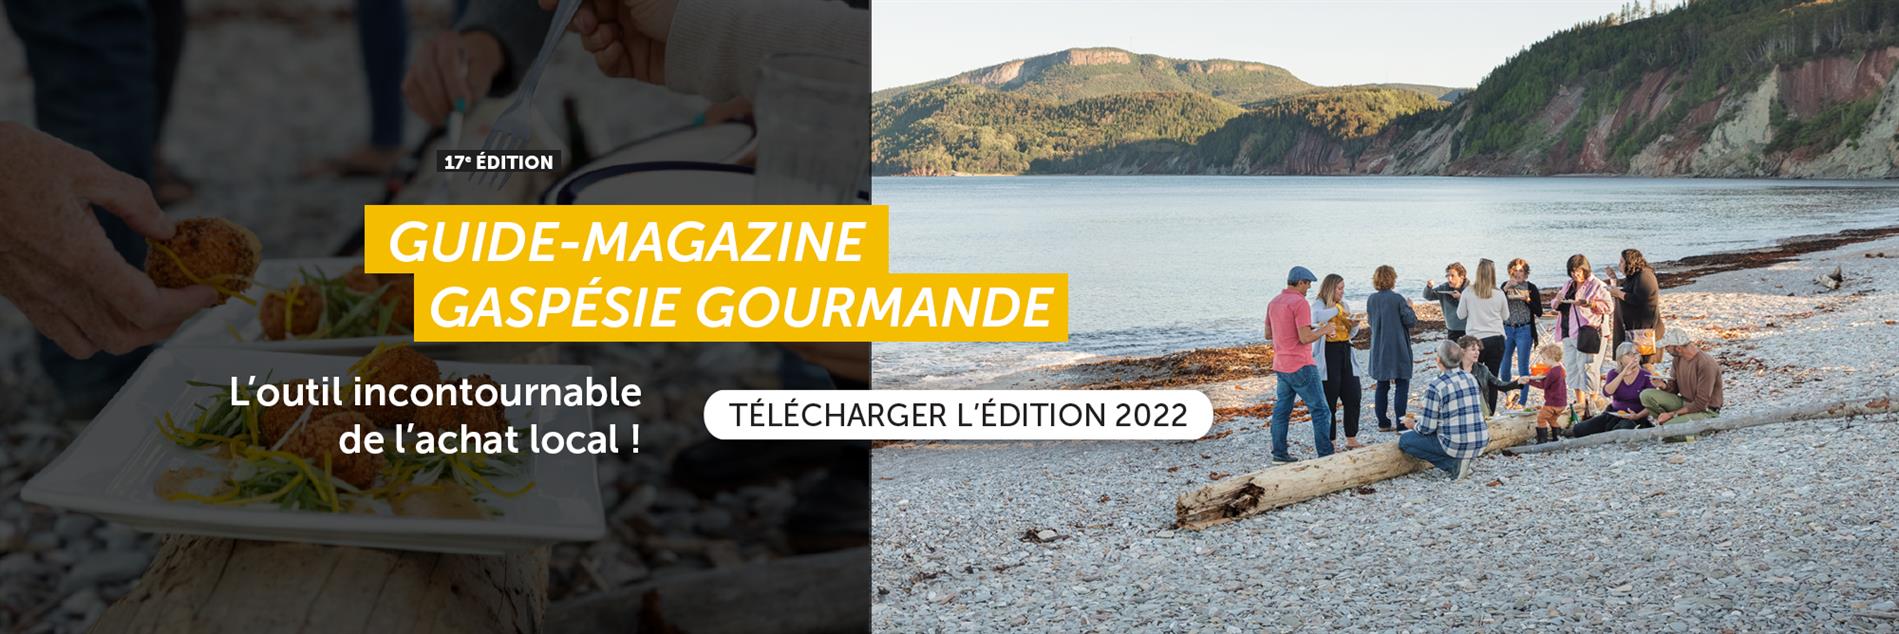 Guide-Magazine Gaspésie Gourmande 2022